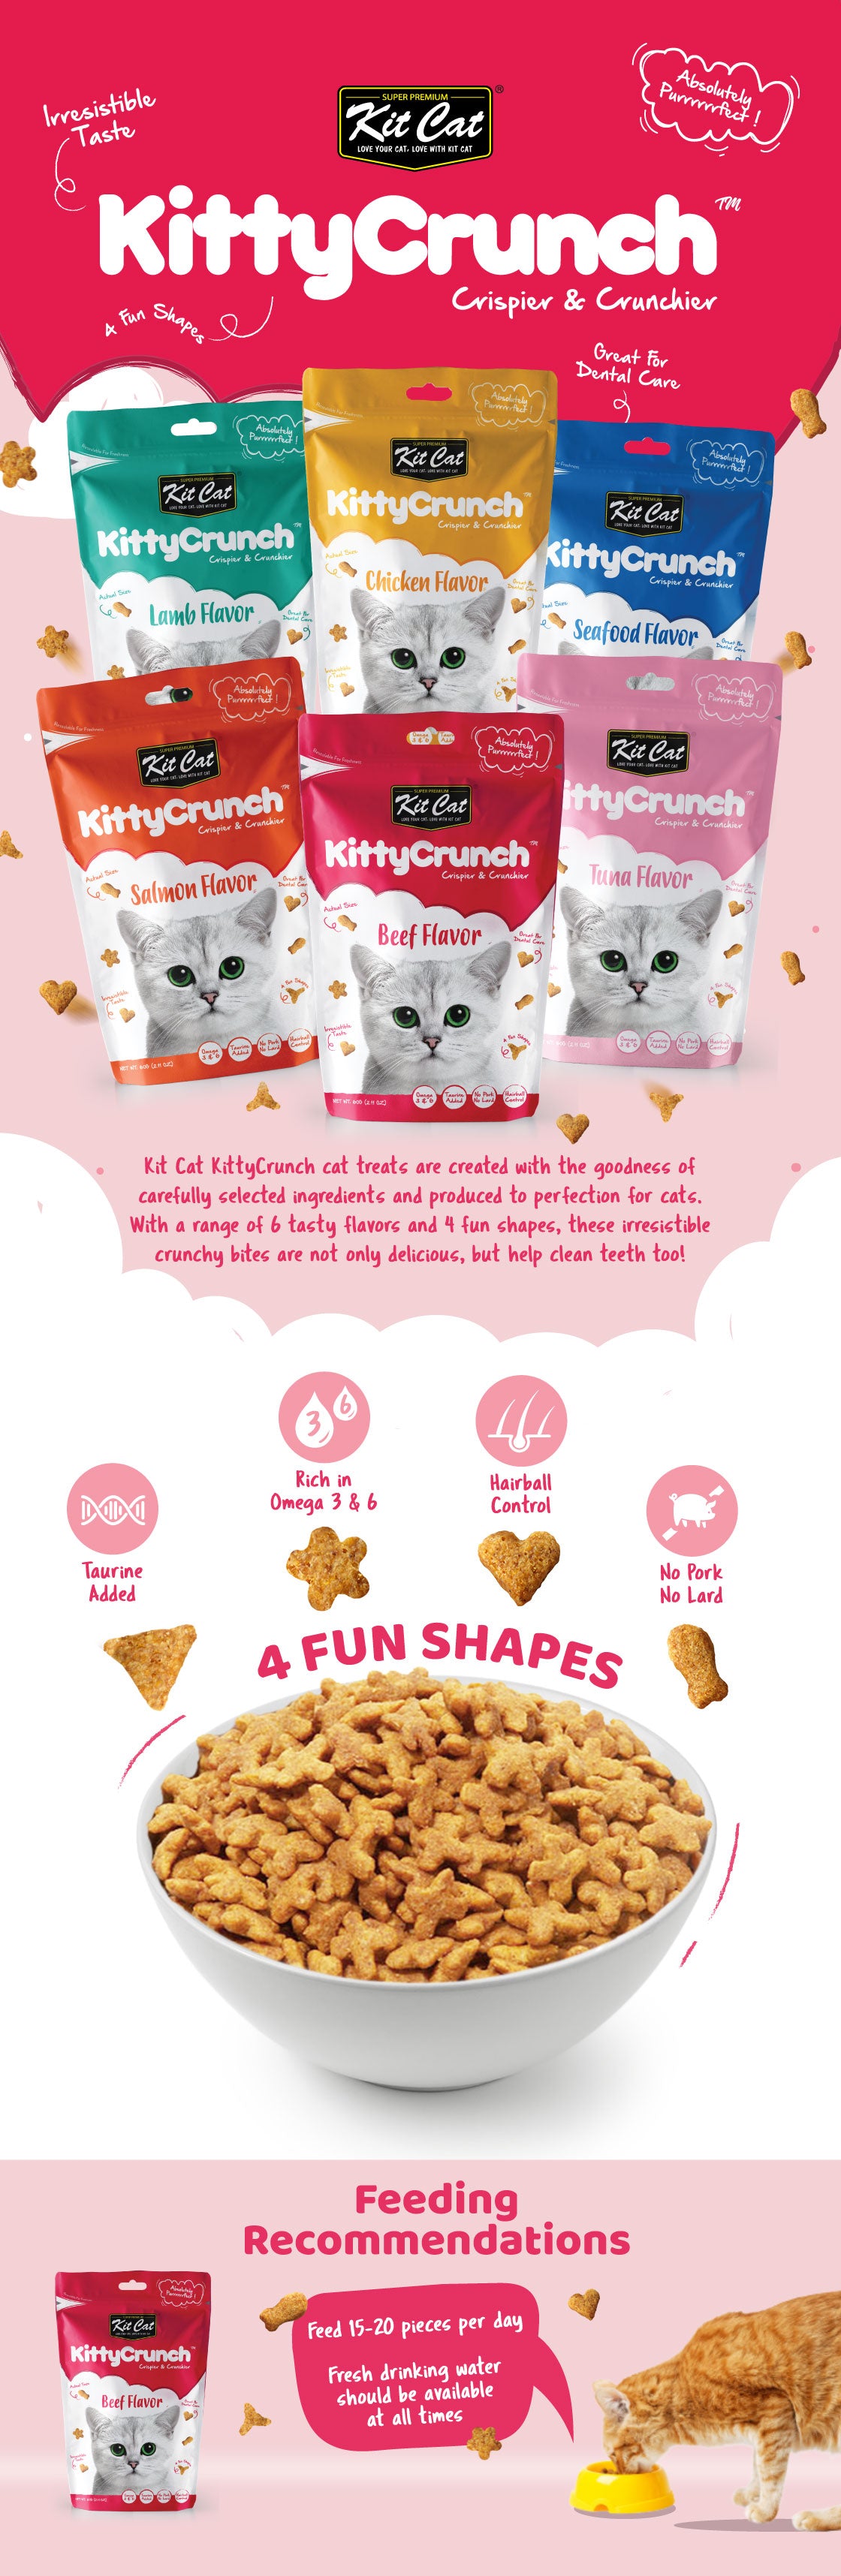 Kit Cat Kitty Crunch Cat Treats - Lamb (60g)